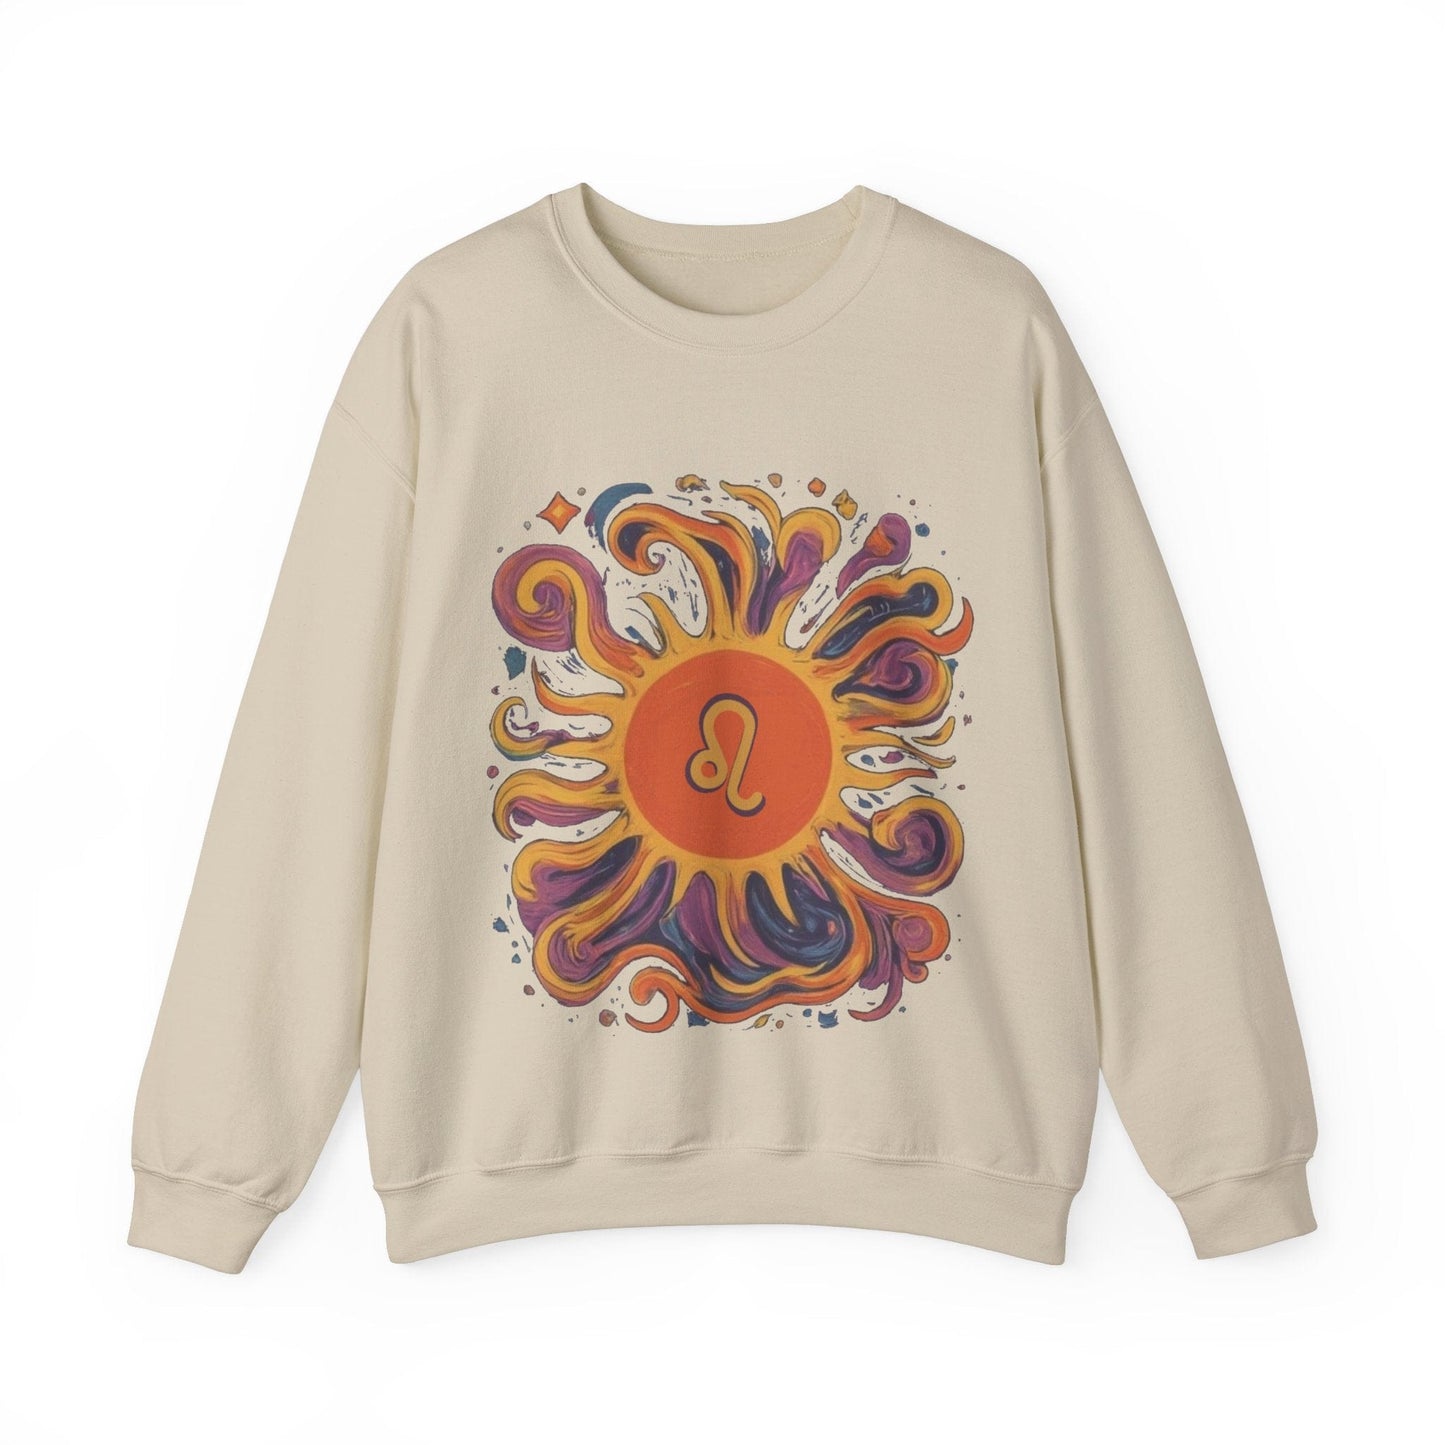 Sweatshirt S / Sand Leo Majestic Sun Soft Sweater: Royal Warmth for the Lion's Heart